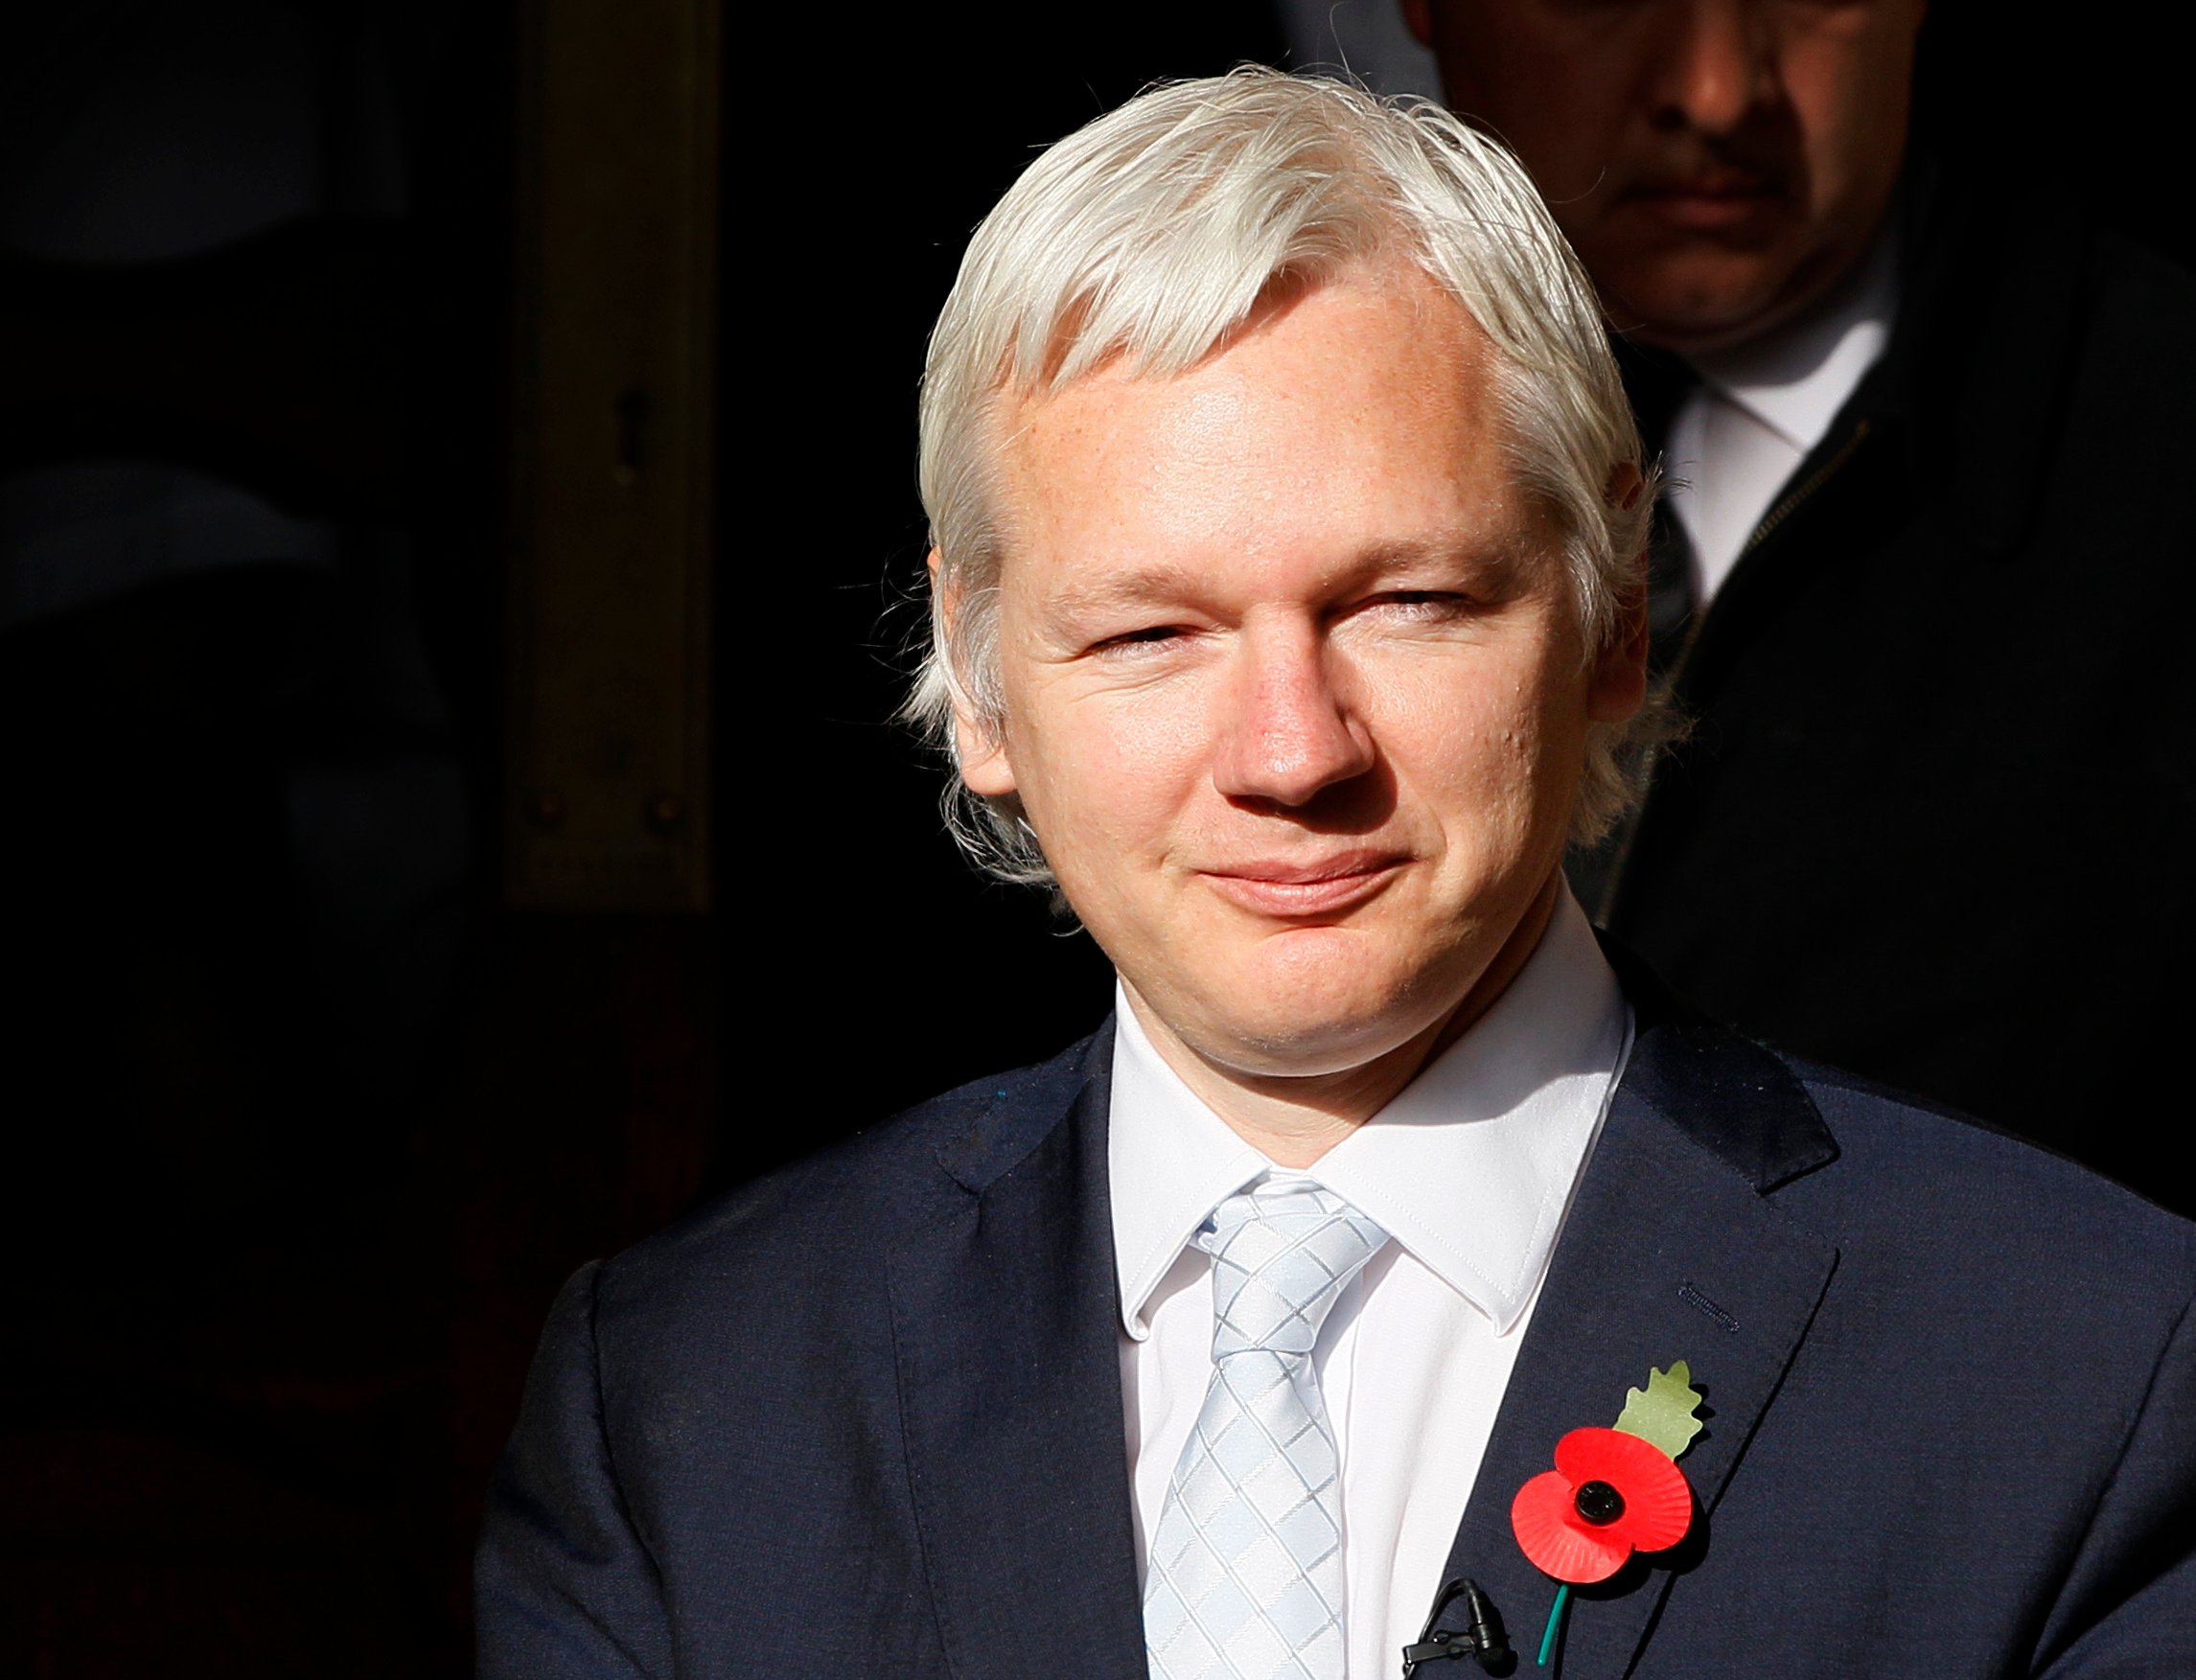 Justitiedepartementet, Julian Assange, Ecuador, Ambassadör, Beatrice Ask, Utlämning, Sverige, Möte, Politisk asyl, Wikileaks